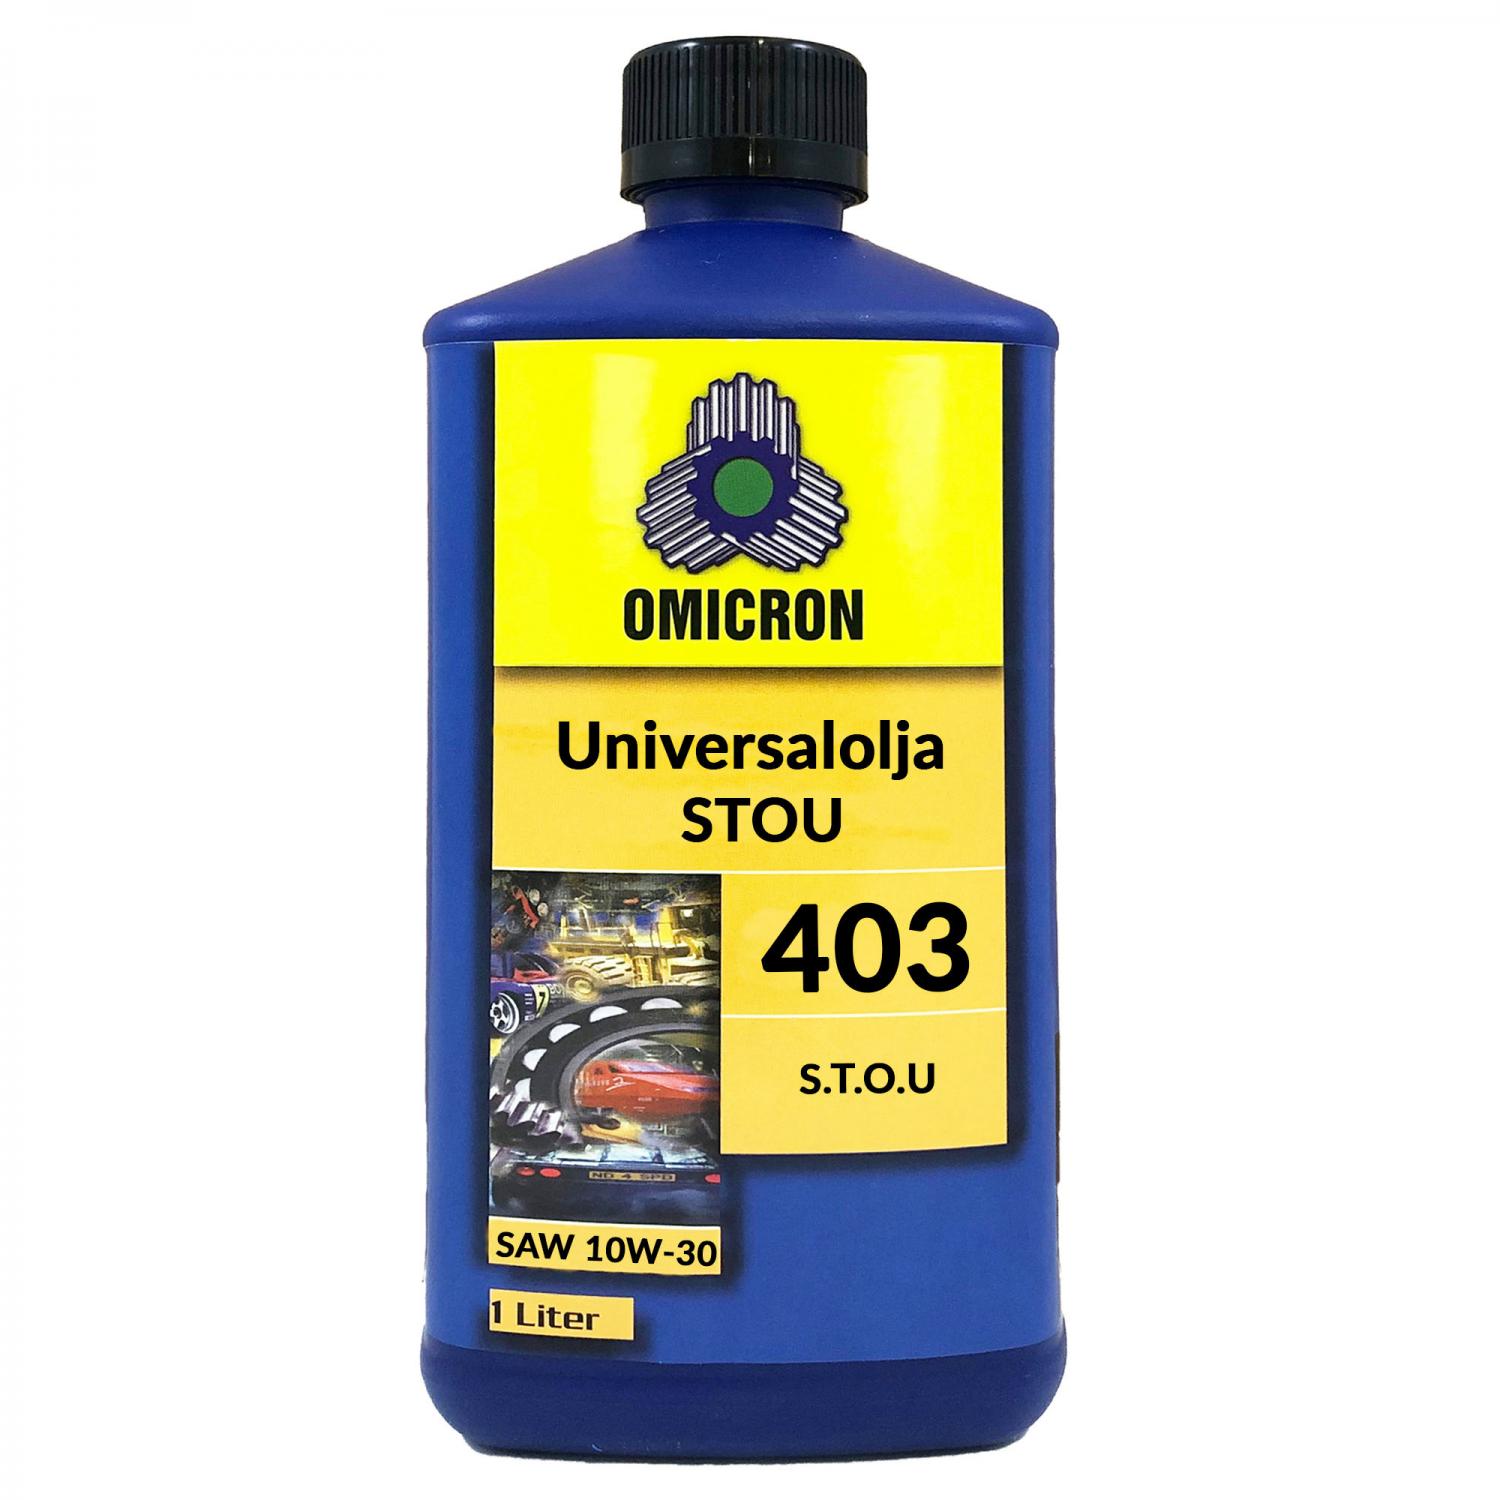 Omicron 403 SAE 10W-30 Universalolja STOU 1L